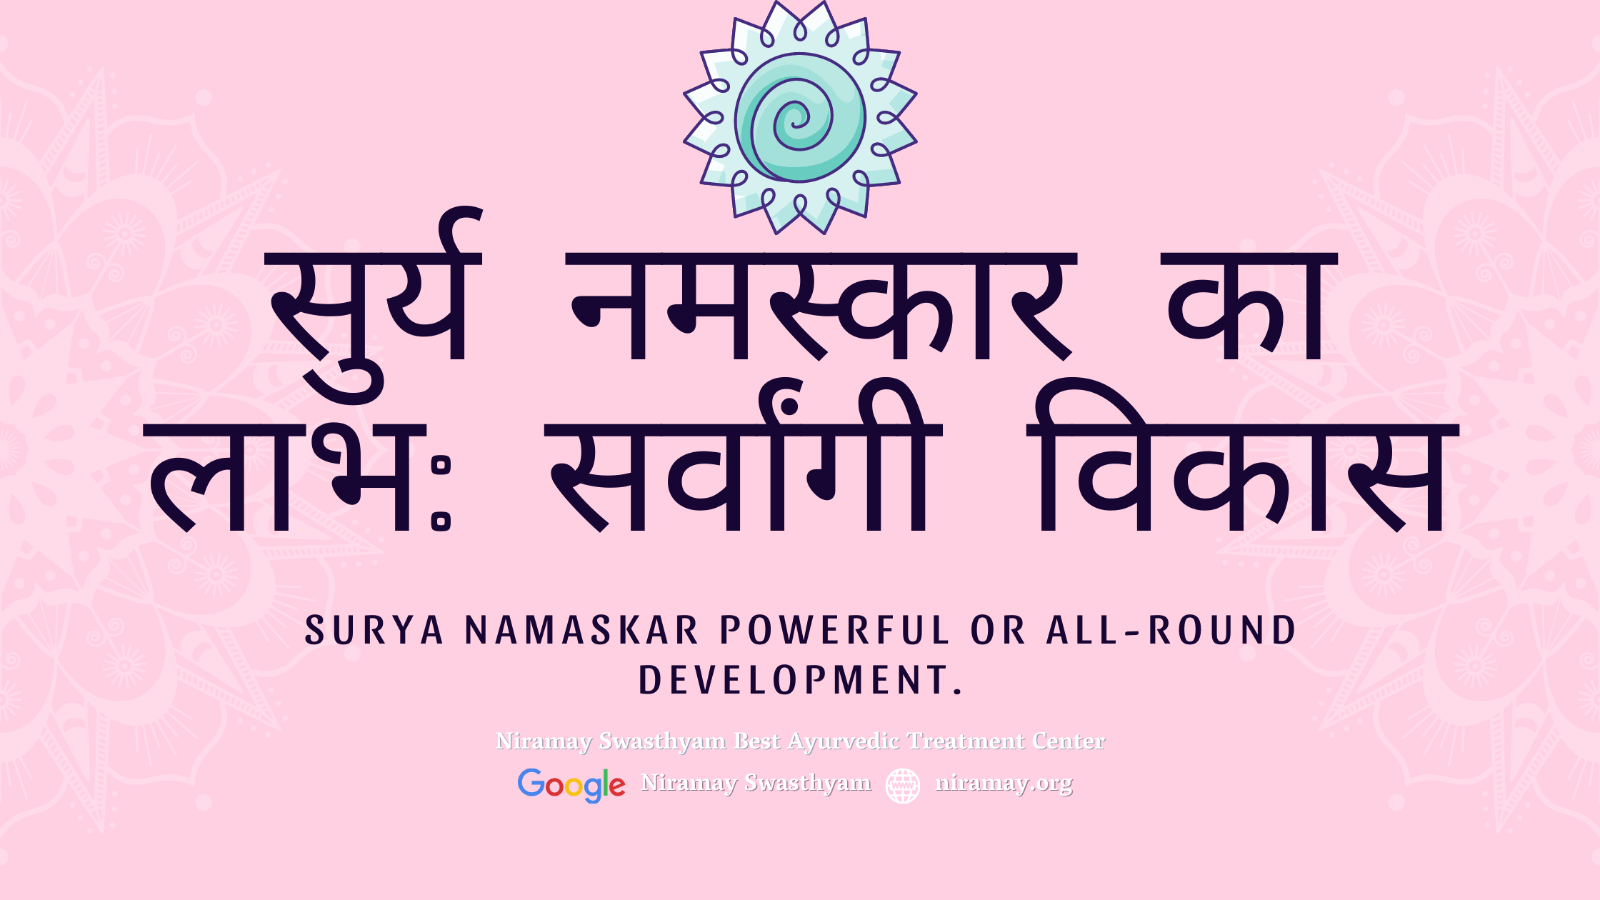 32 सुर्य नमस्कार का लाभ: सर्वांगी विकास Surya Namaskar Powerful or All-round development.